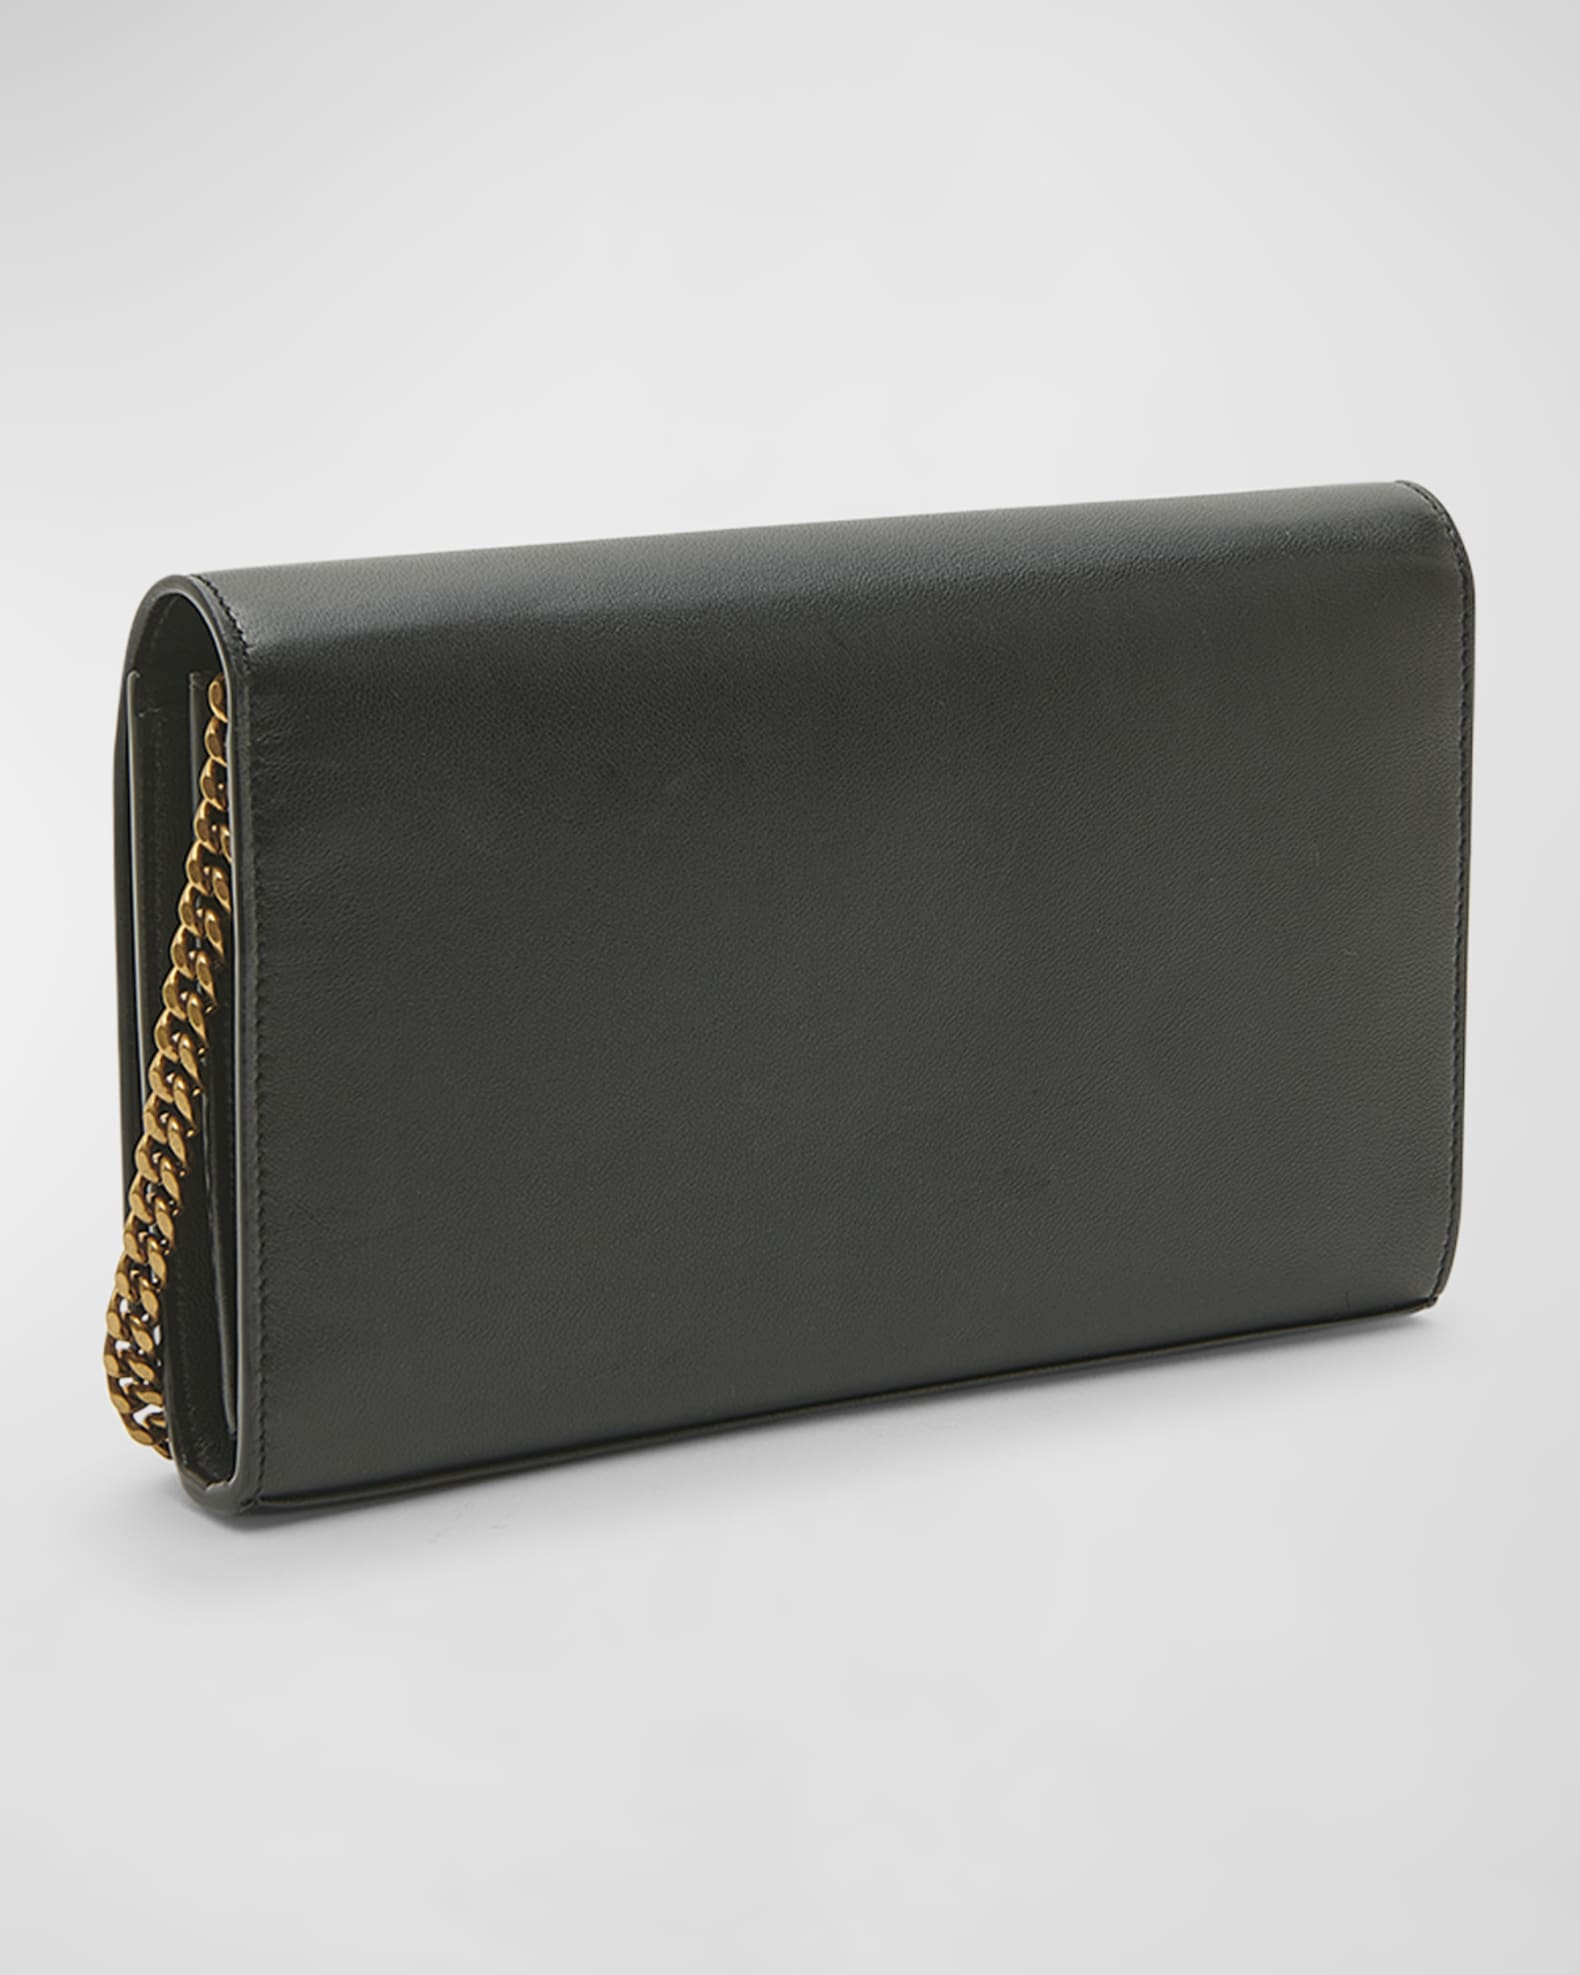 Saint Laurent Ysl Napa Leather Wallet on Chain Black